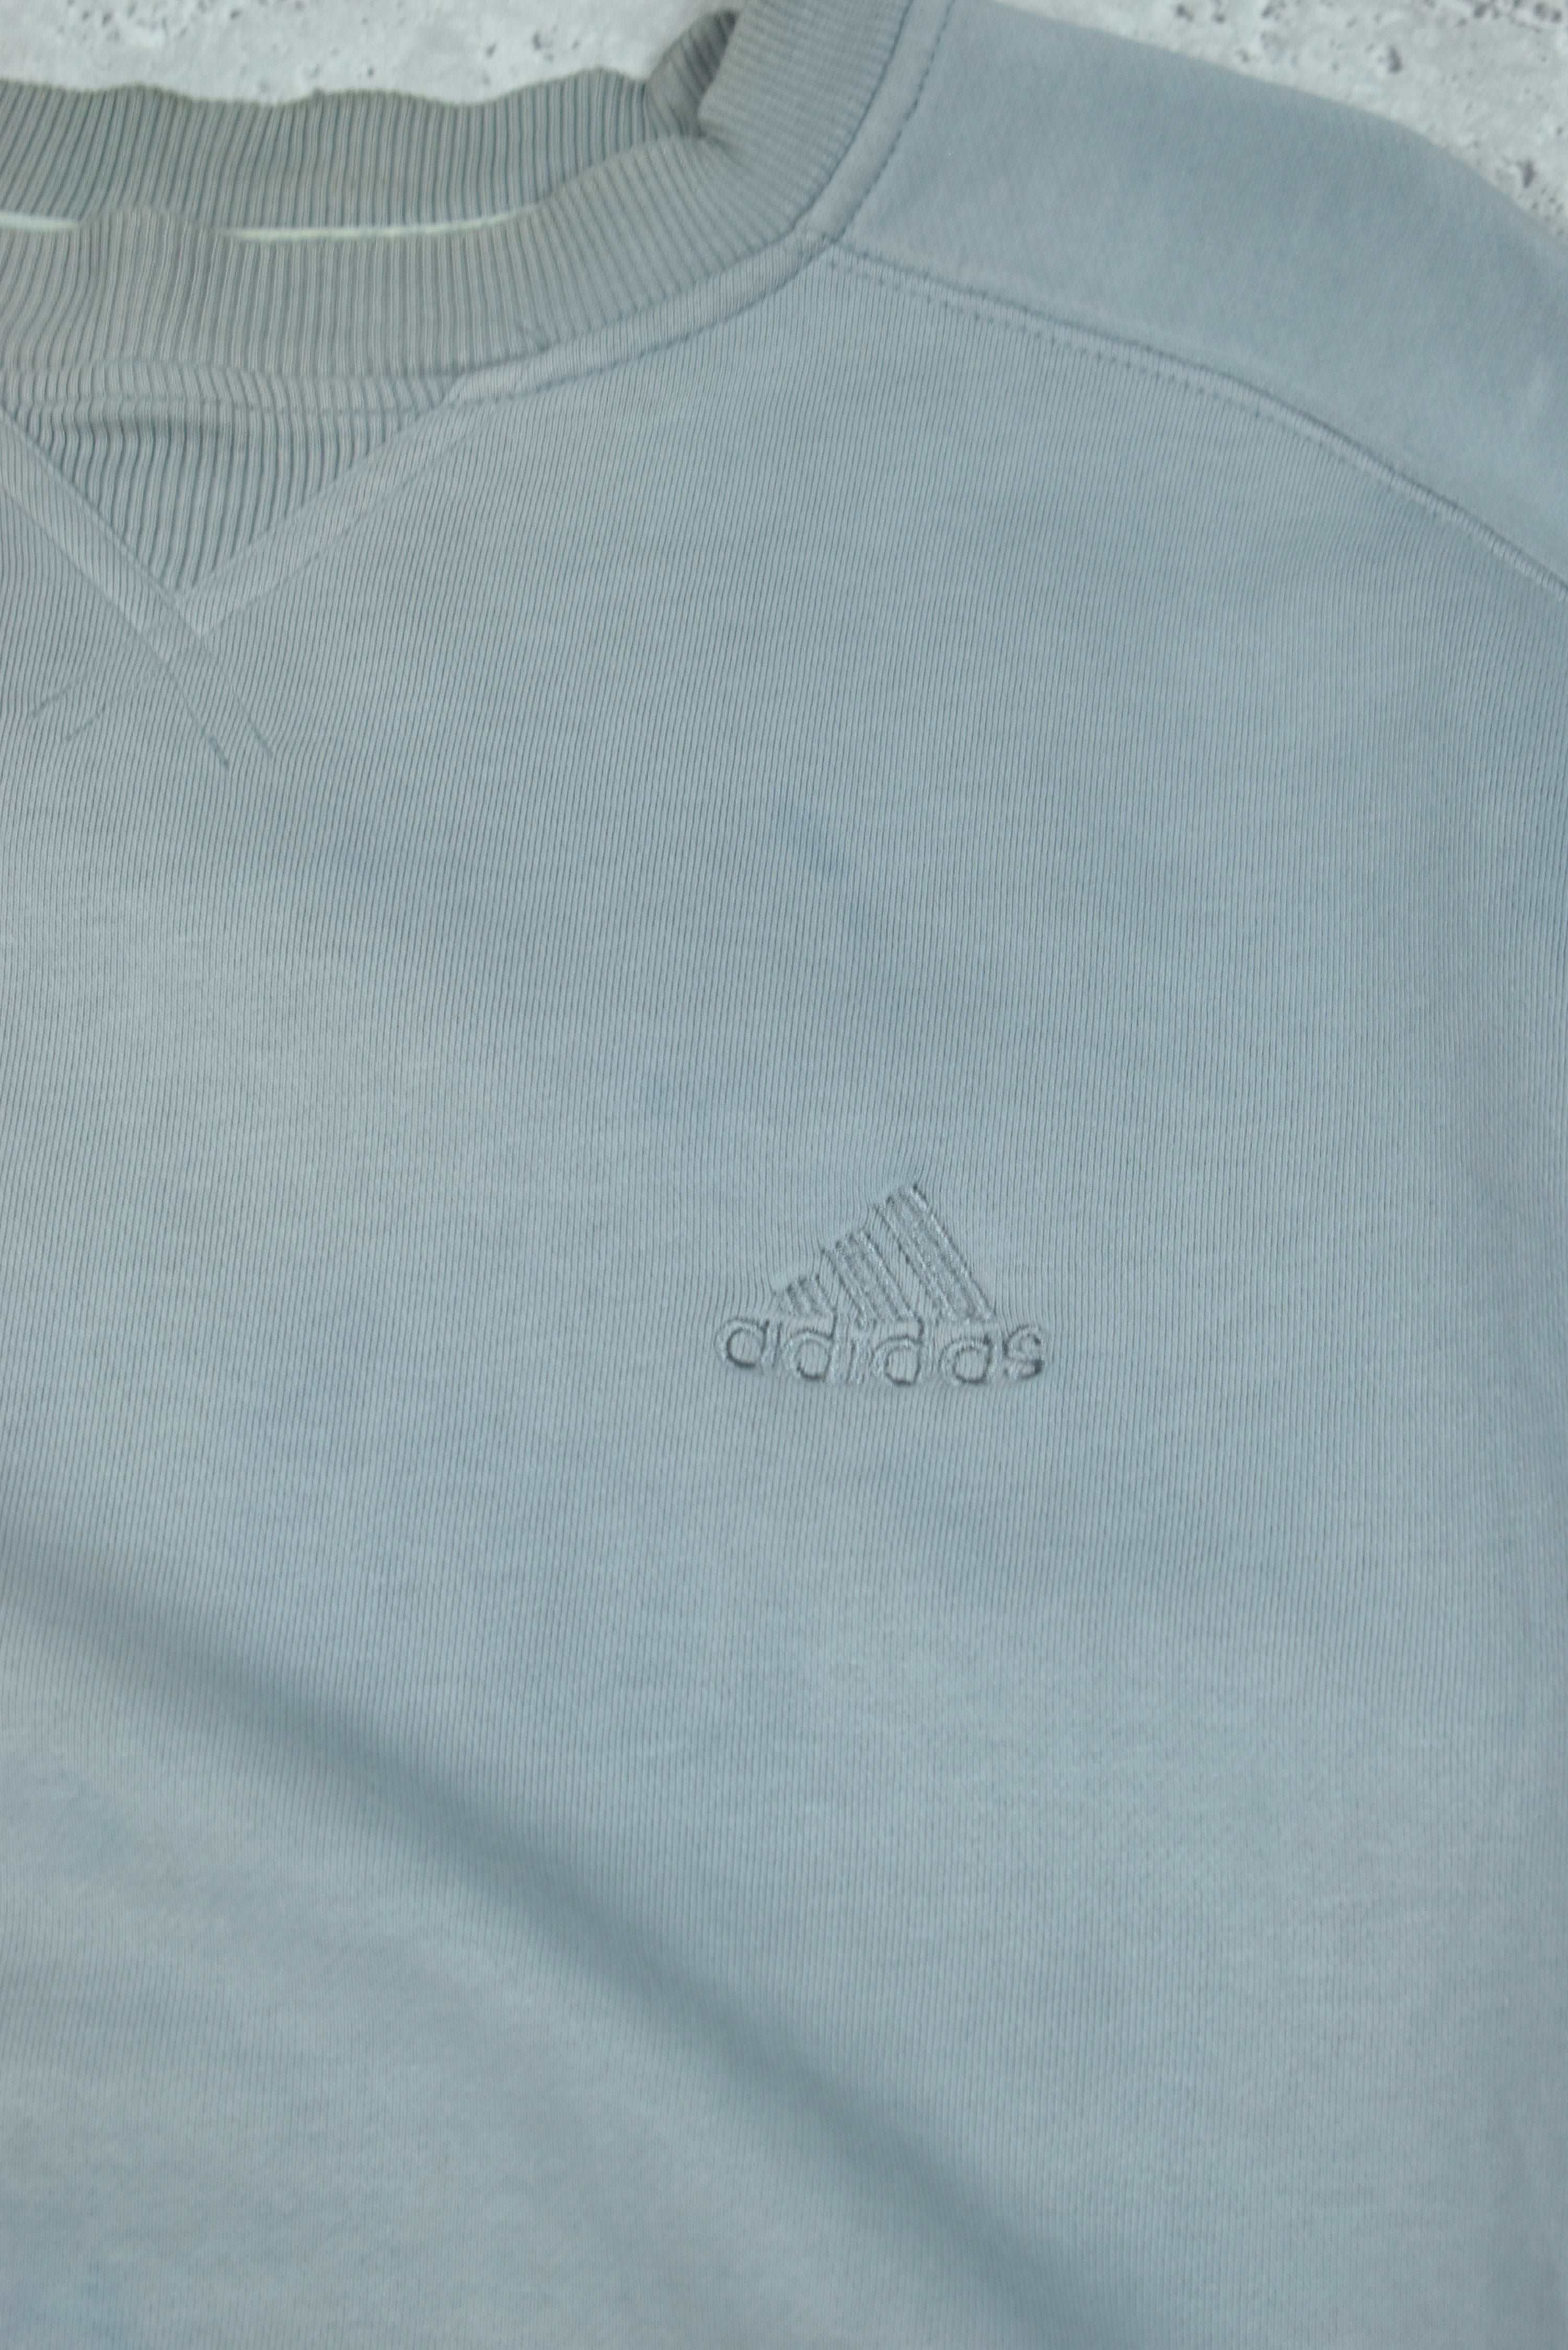 Vintage Adidas Embroidered Logo Sweatshirt XL